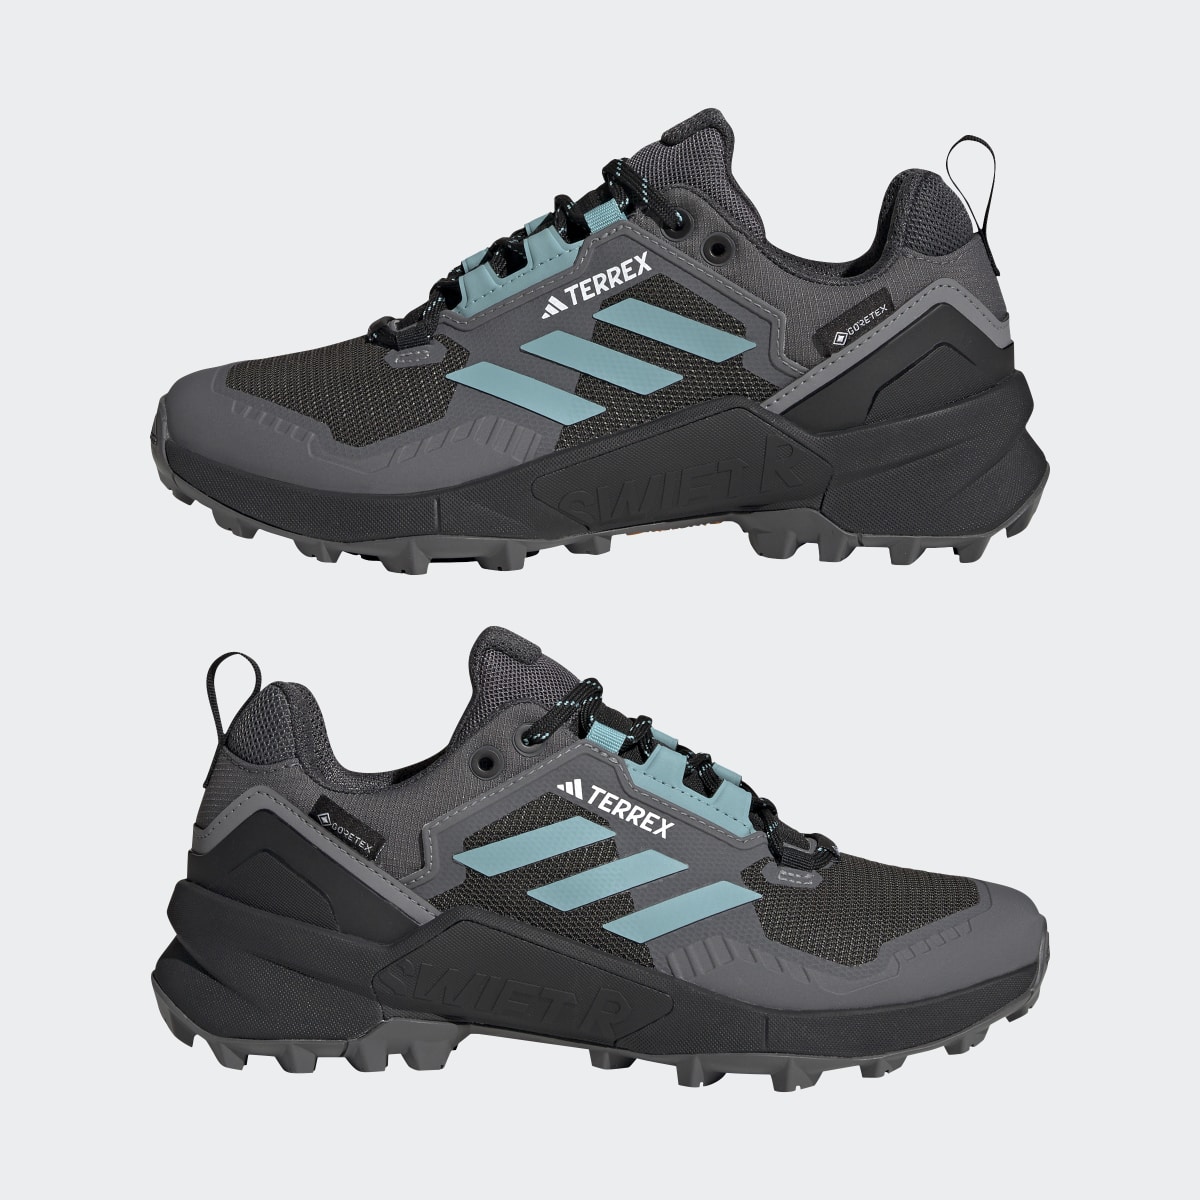 Adidas TERREX Swift R3 GORE-TEX Hiking Shoes. 11